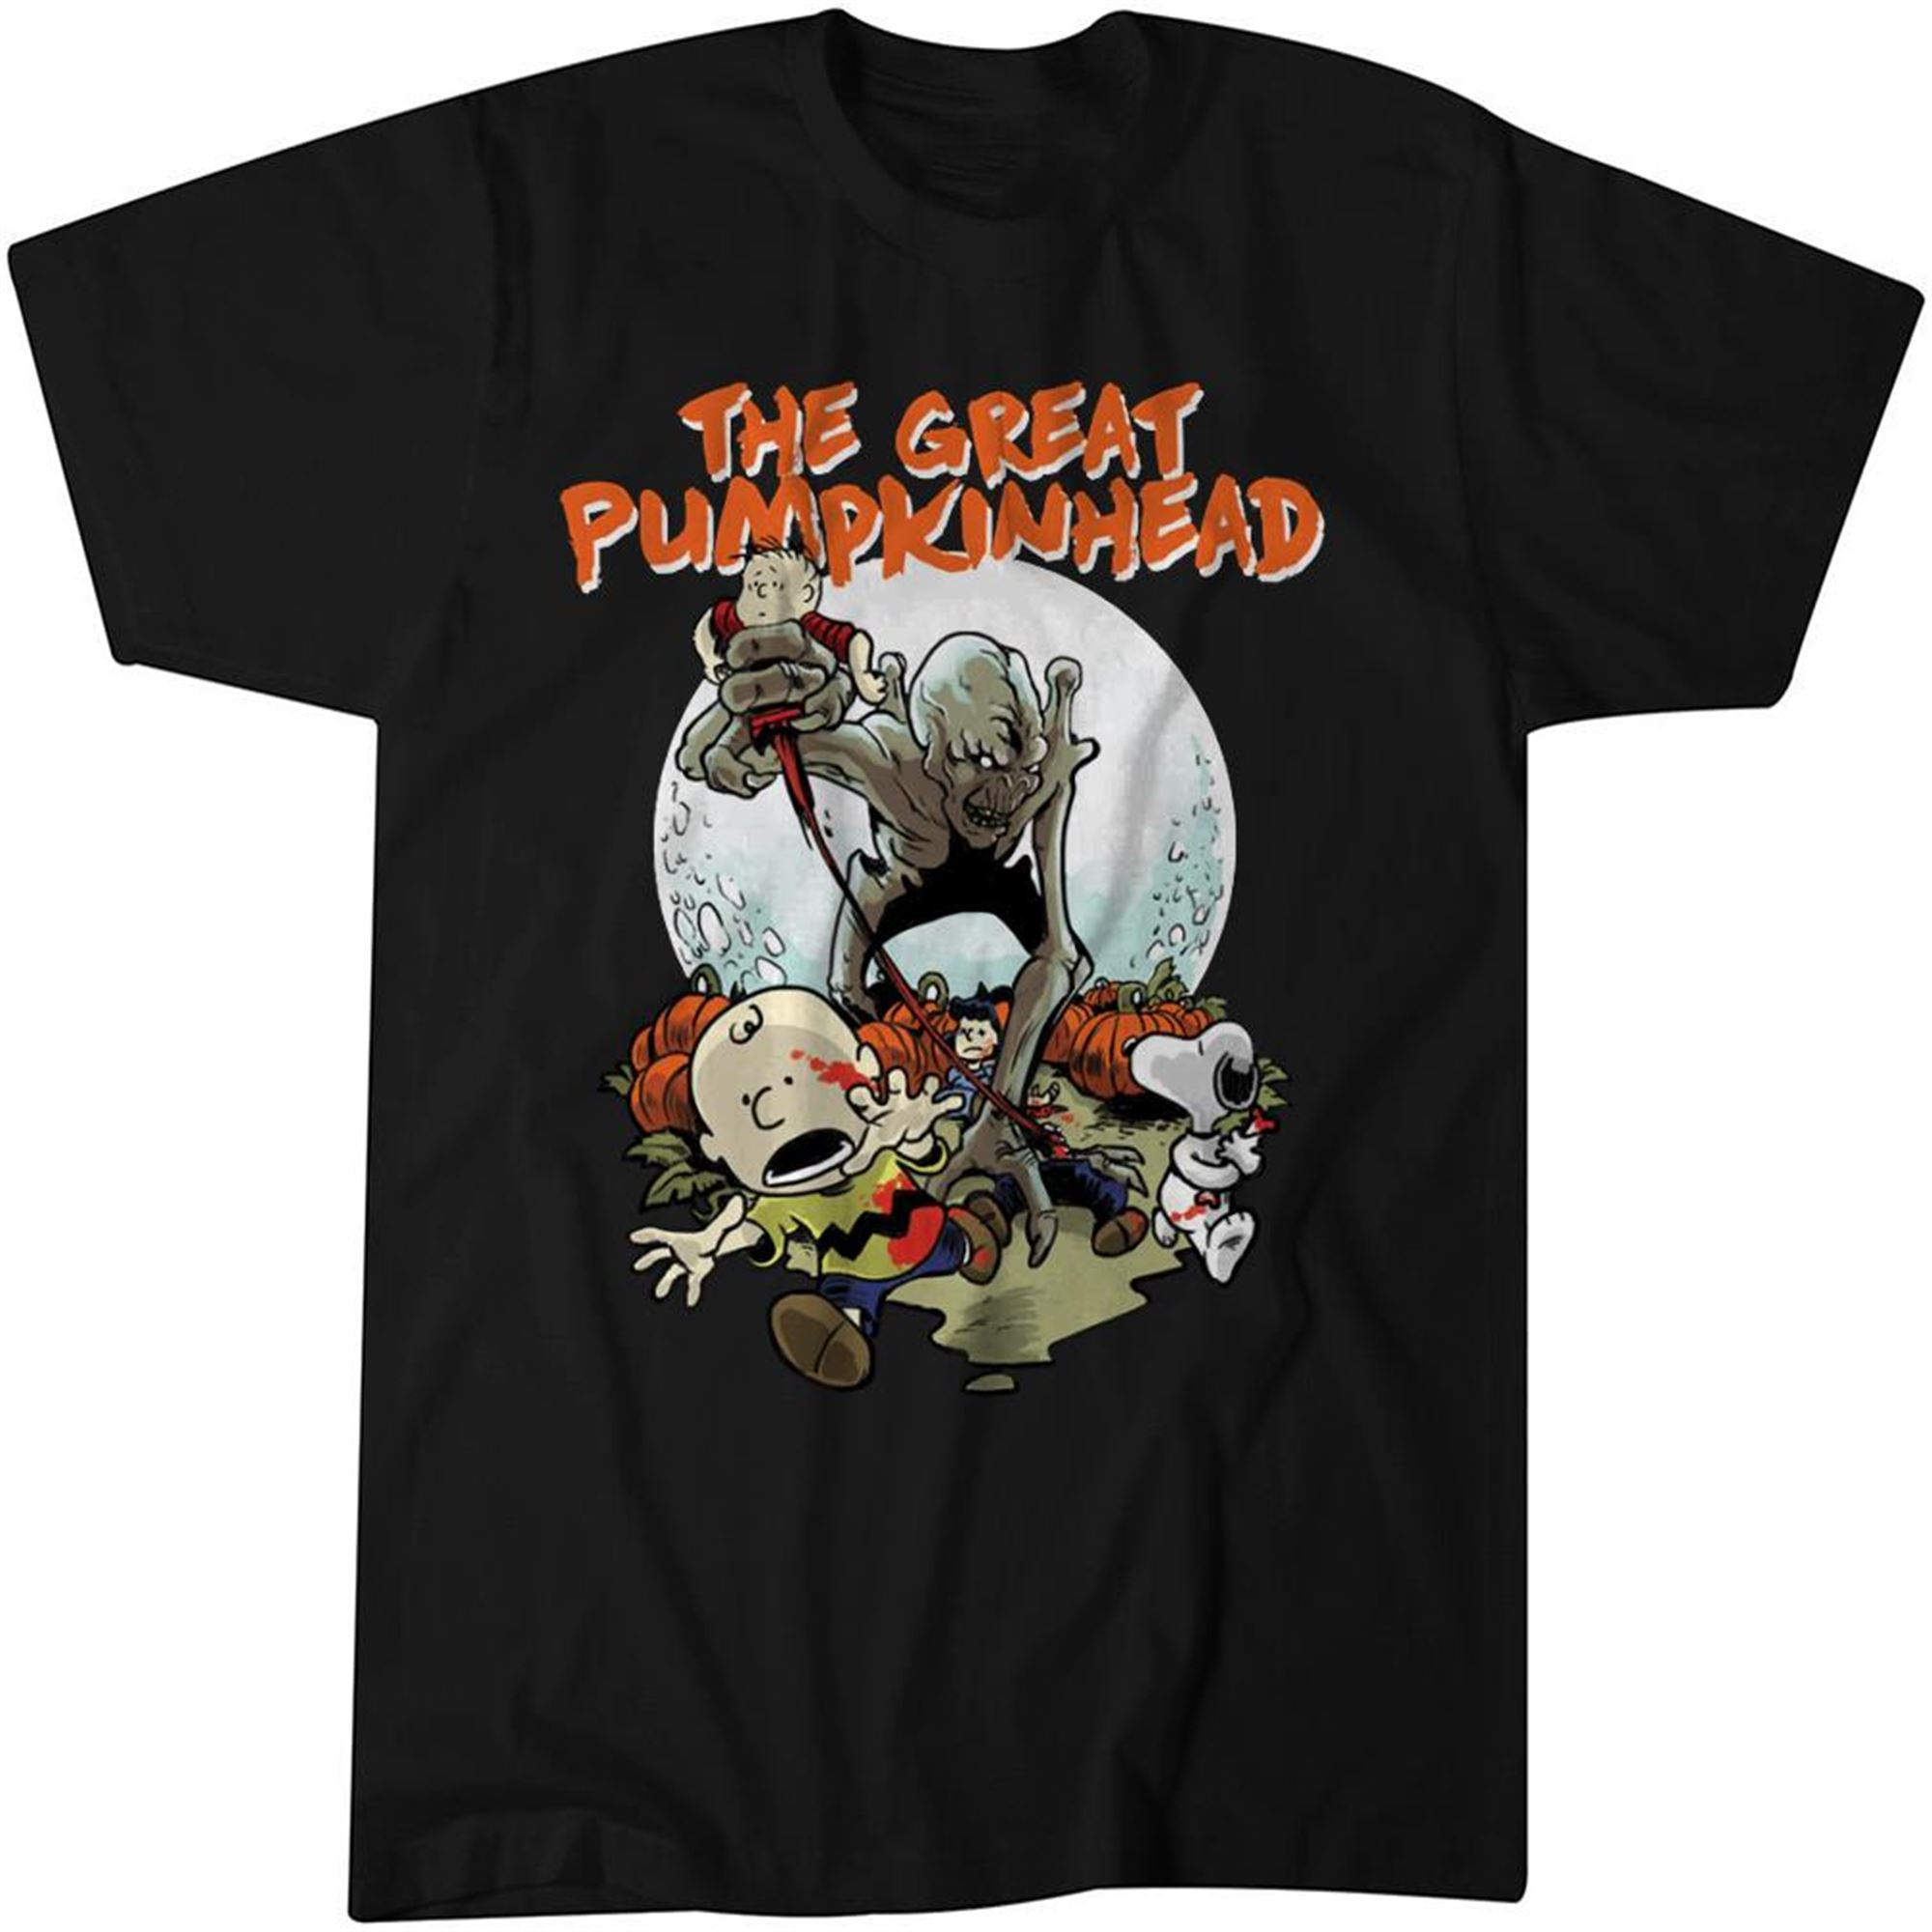 The Great Pumpkinhead Halloween T-shirt Size Up To 5xl